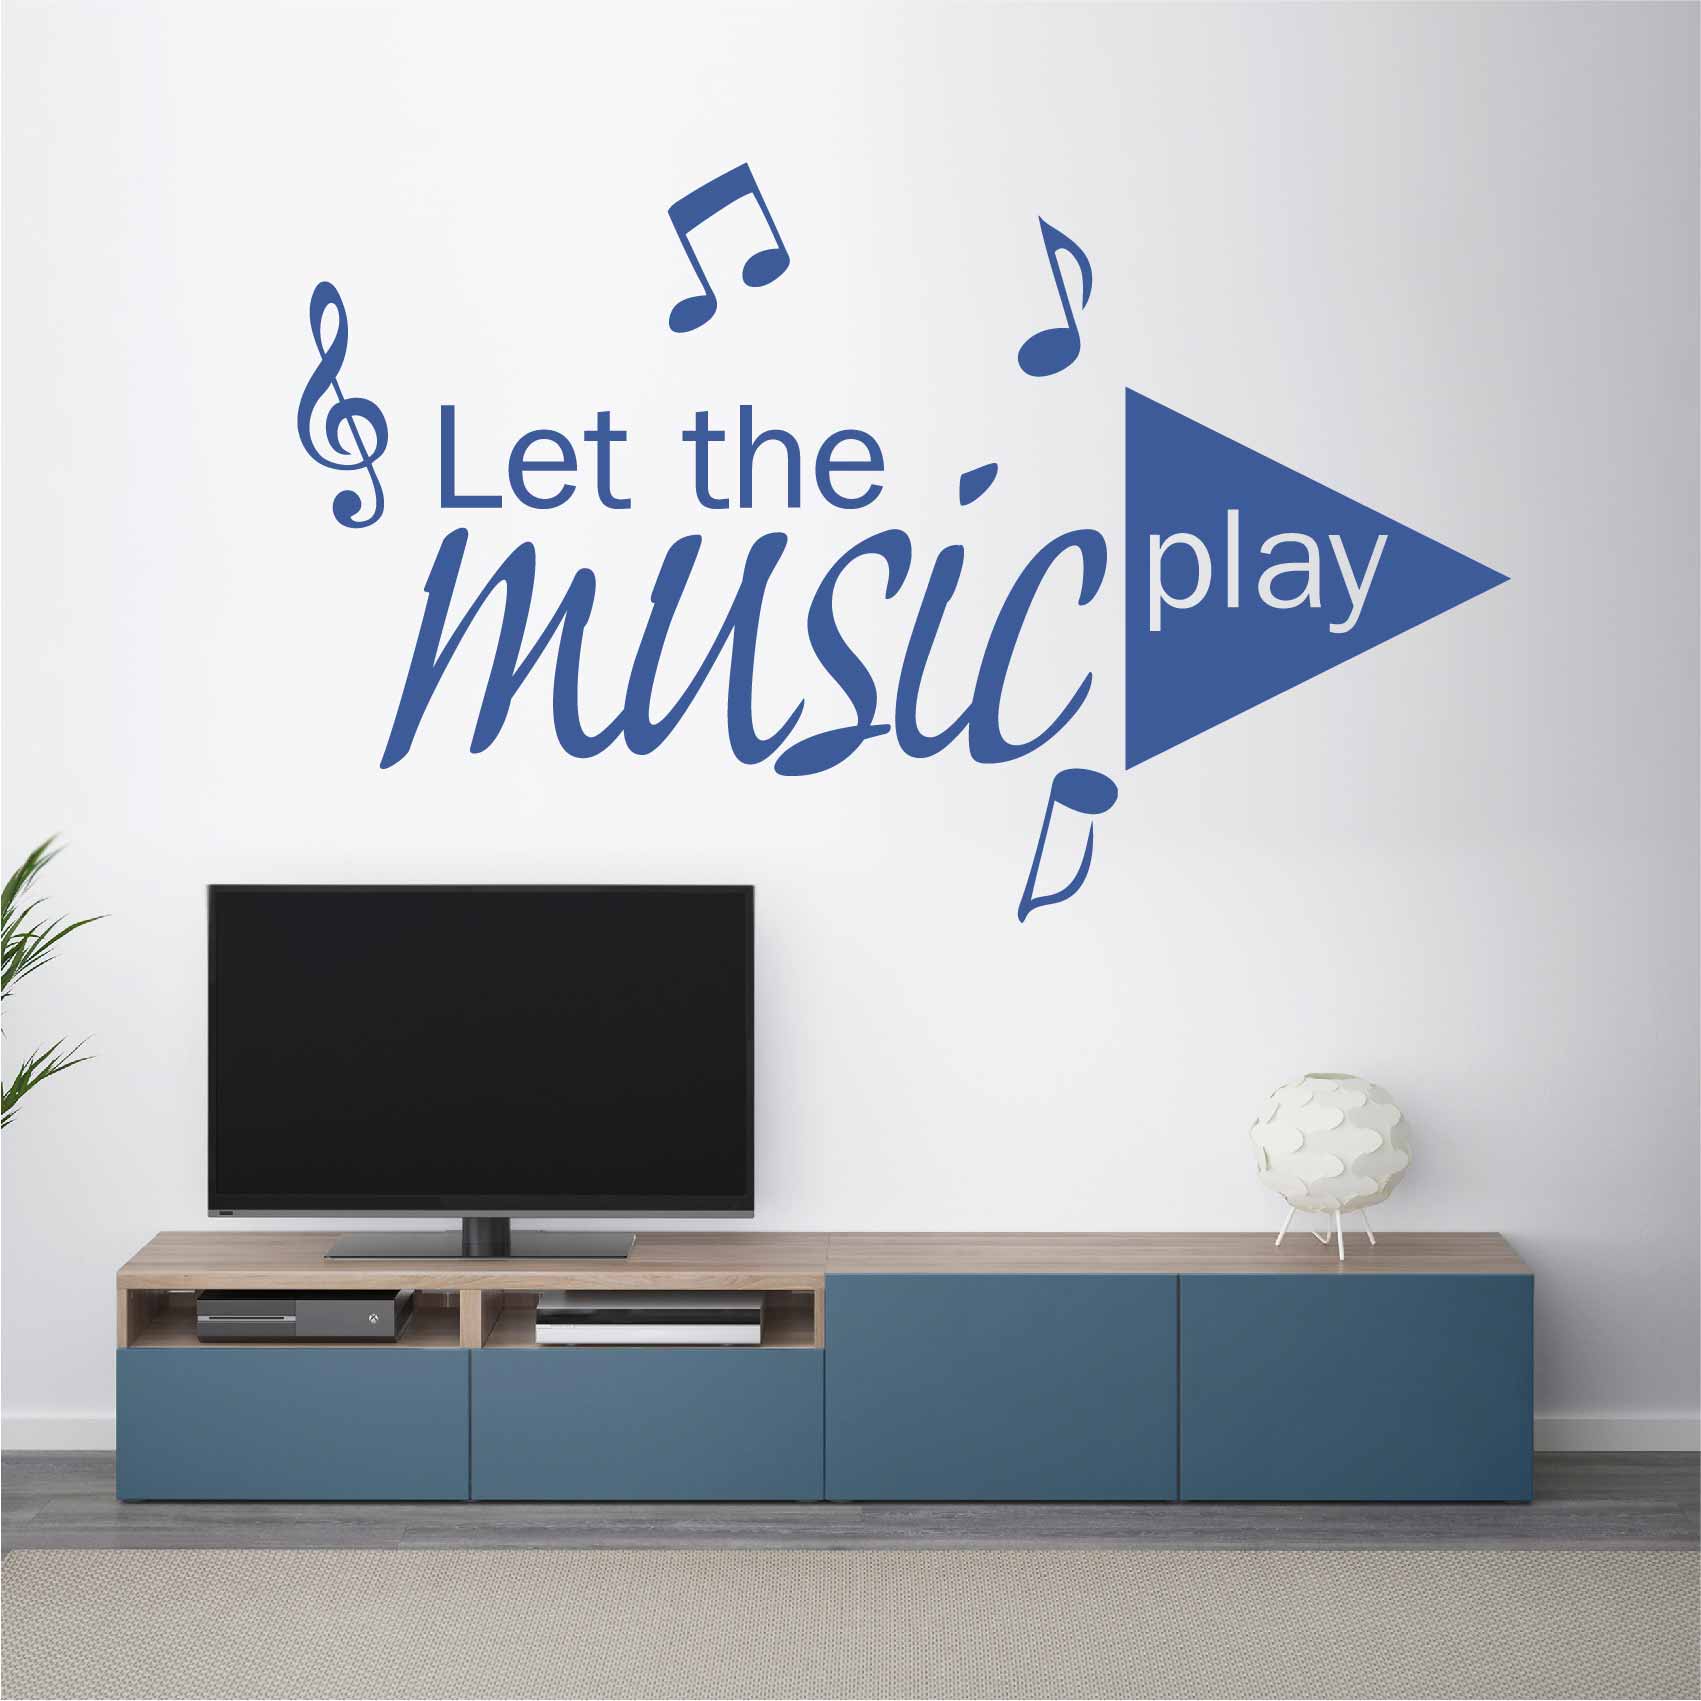 stickers-let-the-music-play-ref23musique-autocollant-muraux-musique-sticker-mural-musical-note-notes-deco-salon-chambre-adulte-ado-enfant